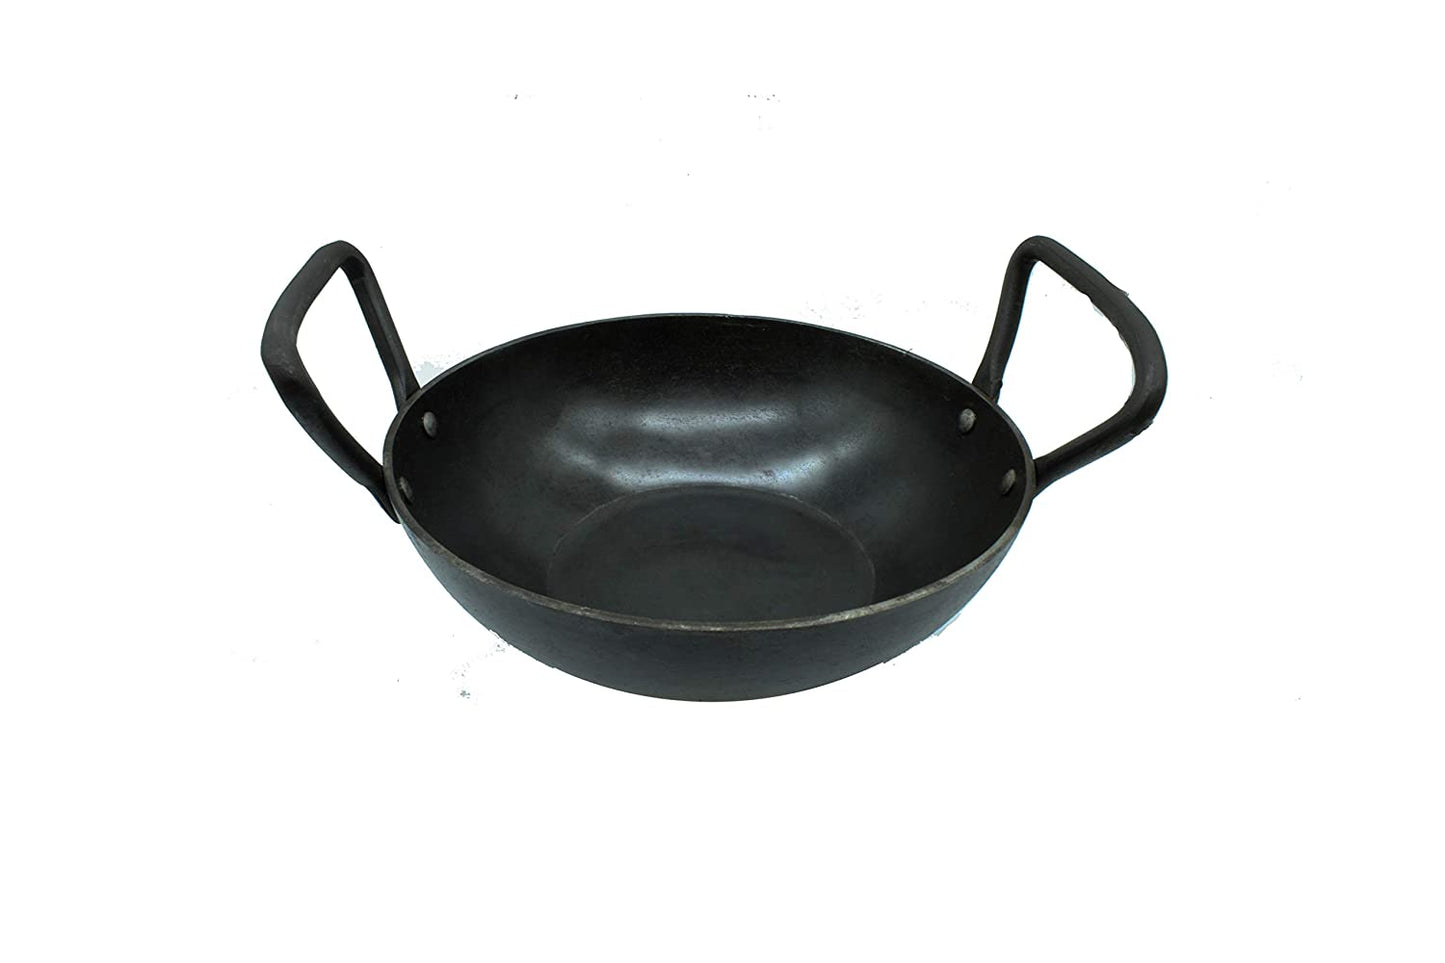 Traditional Iron Kadai with plastic handles - shallow frying